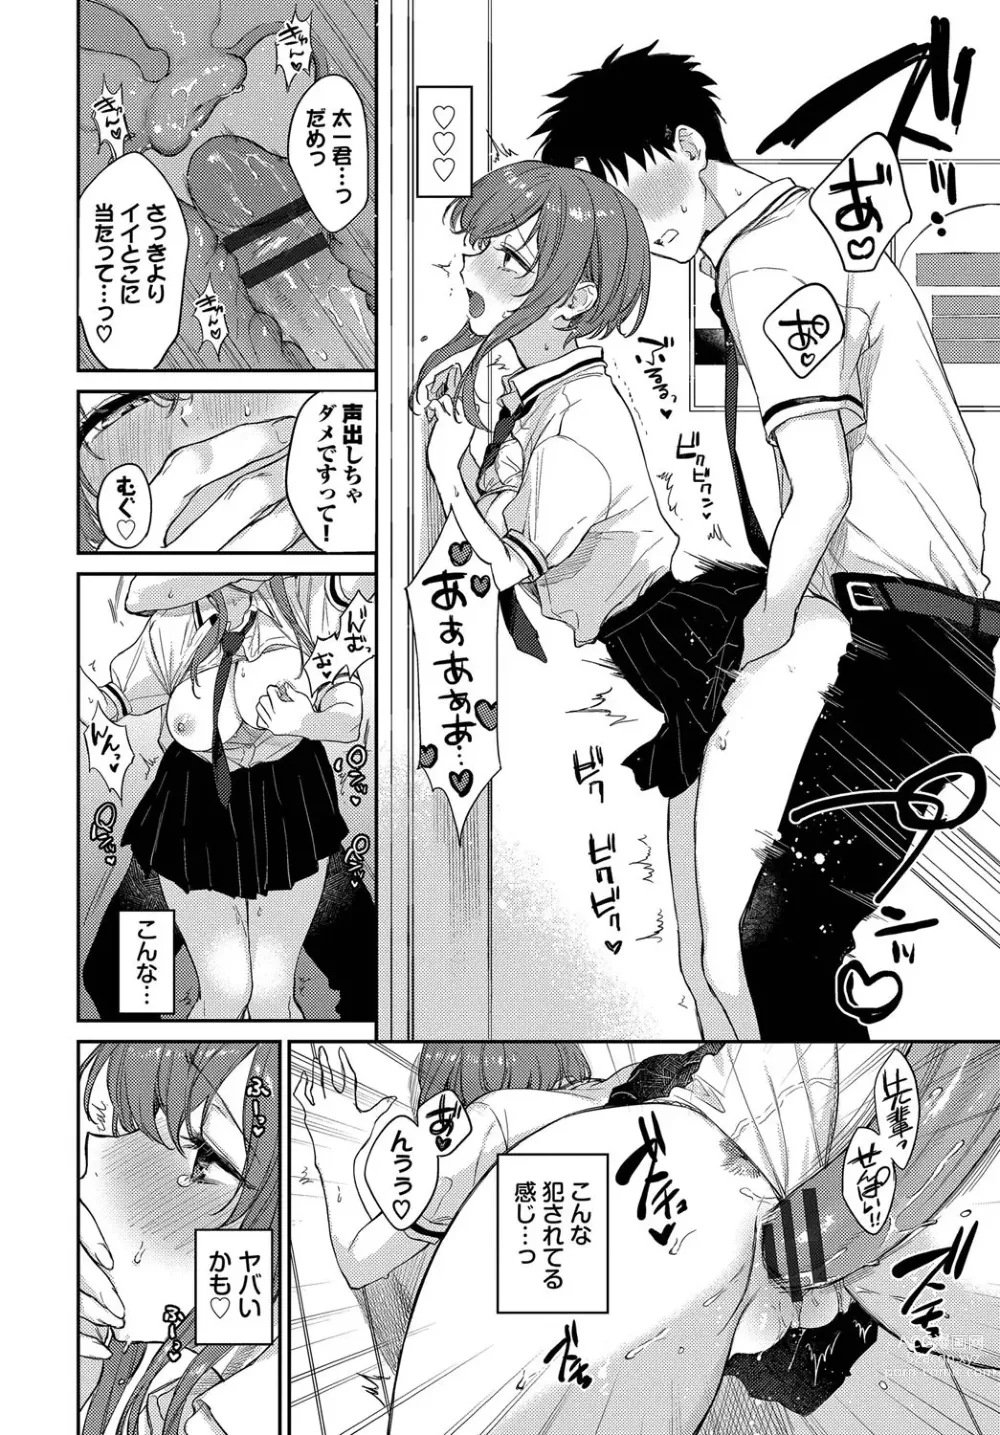 Page 209 of manga Mutsuri Bloom